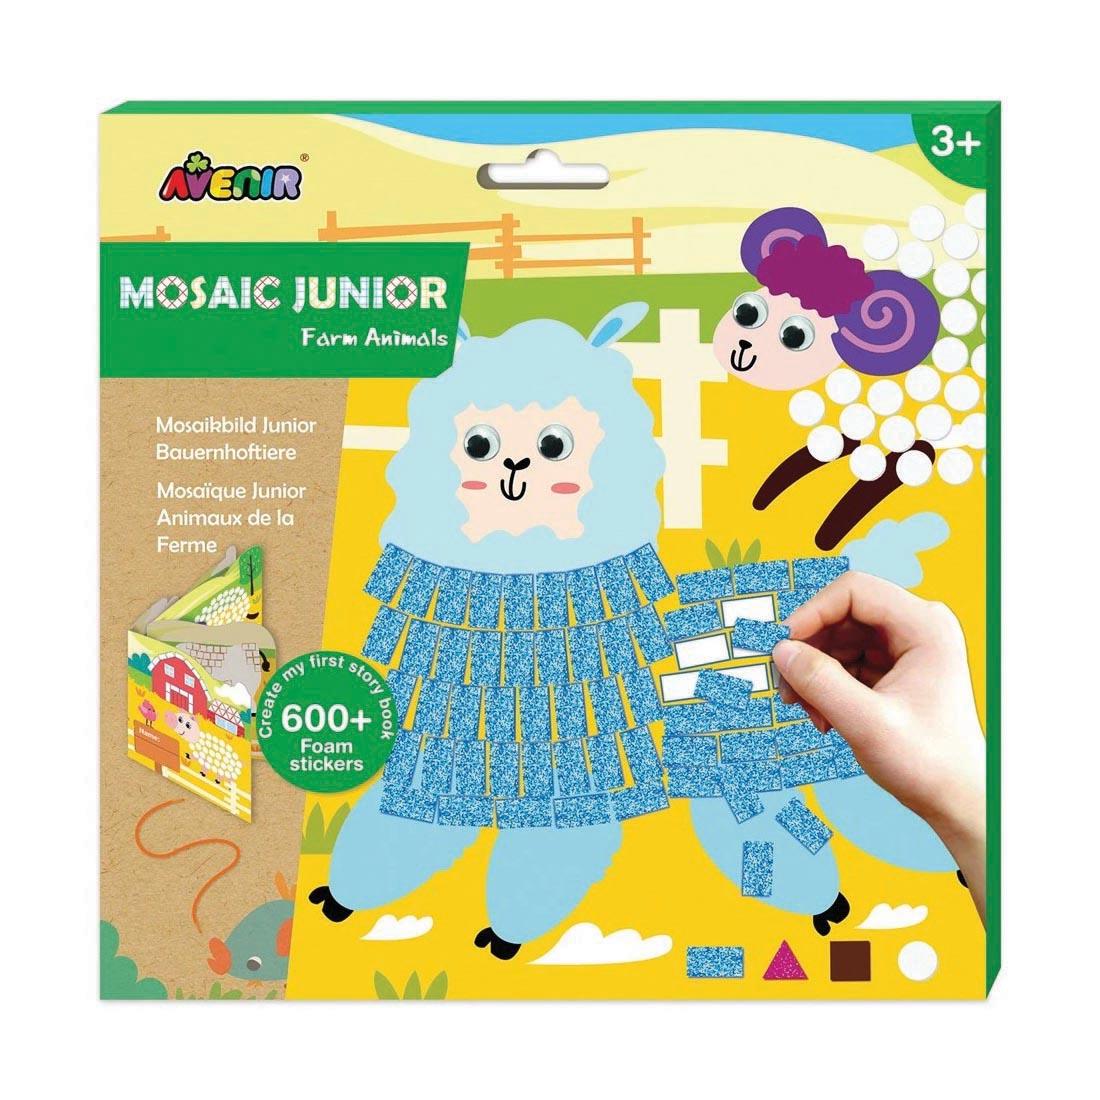 Mosaic Junior Farm Animals by Avenir